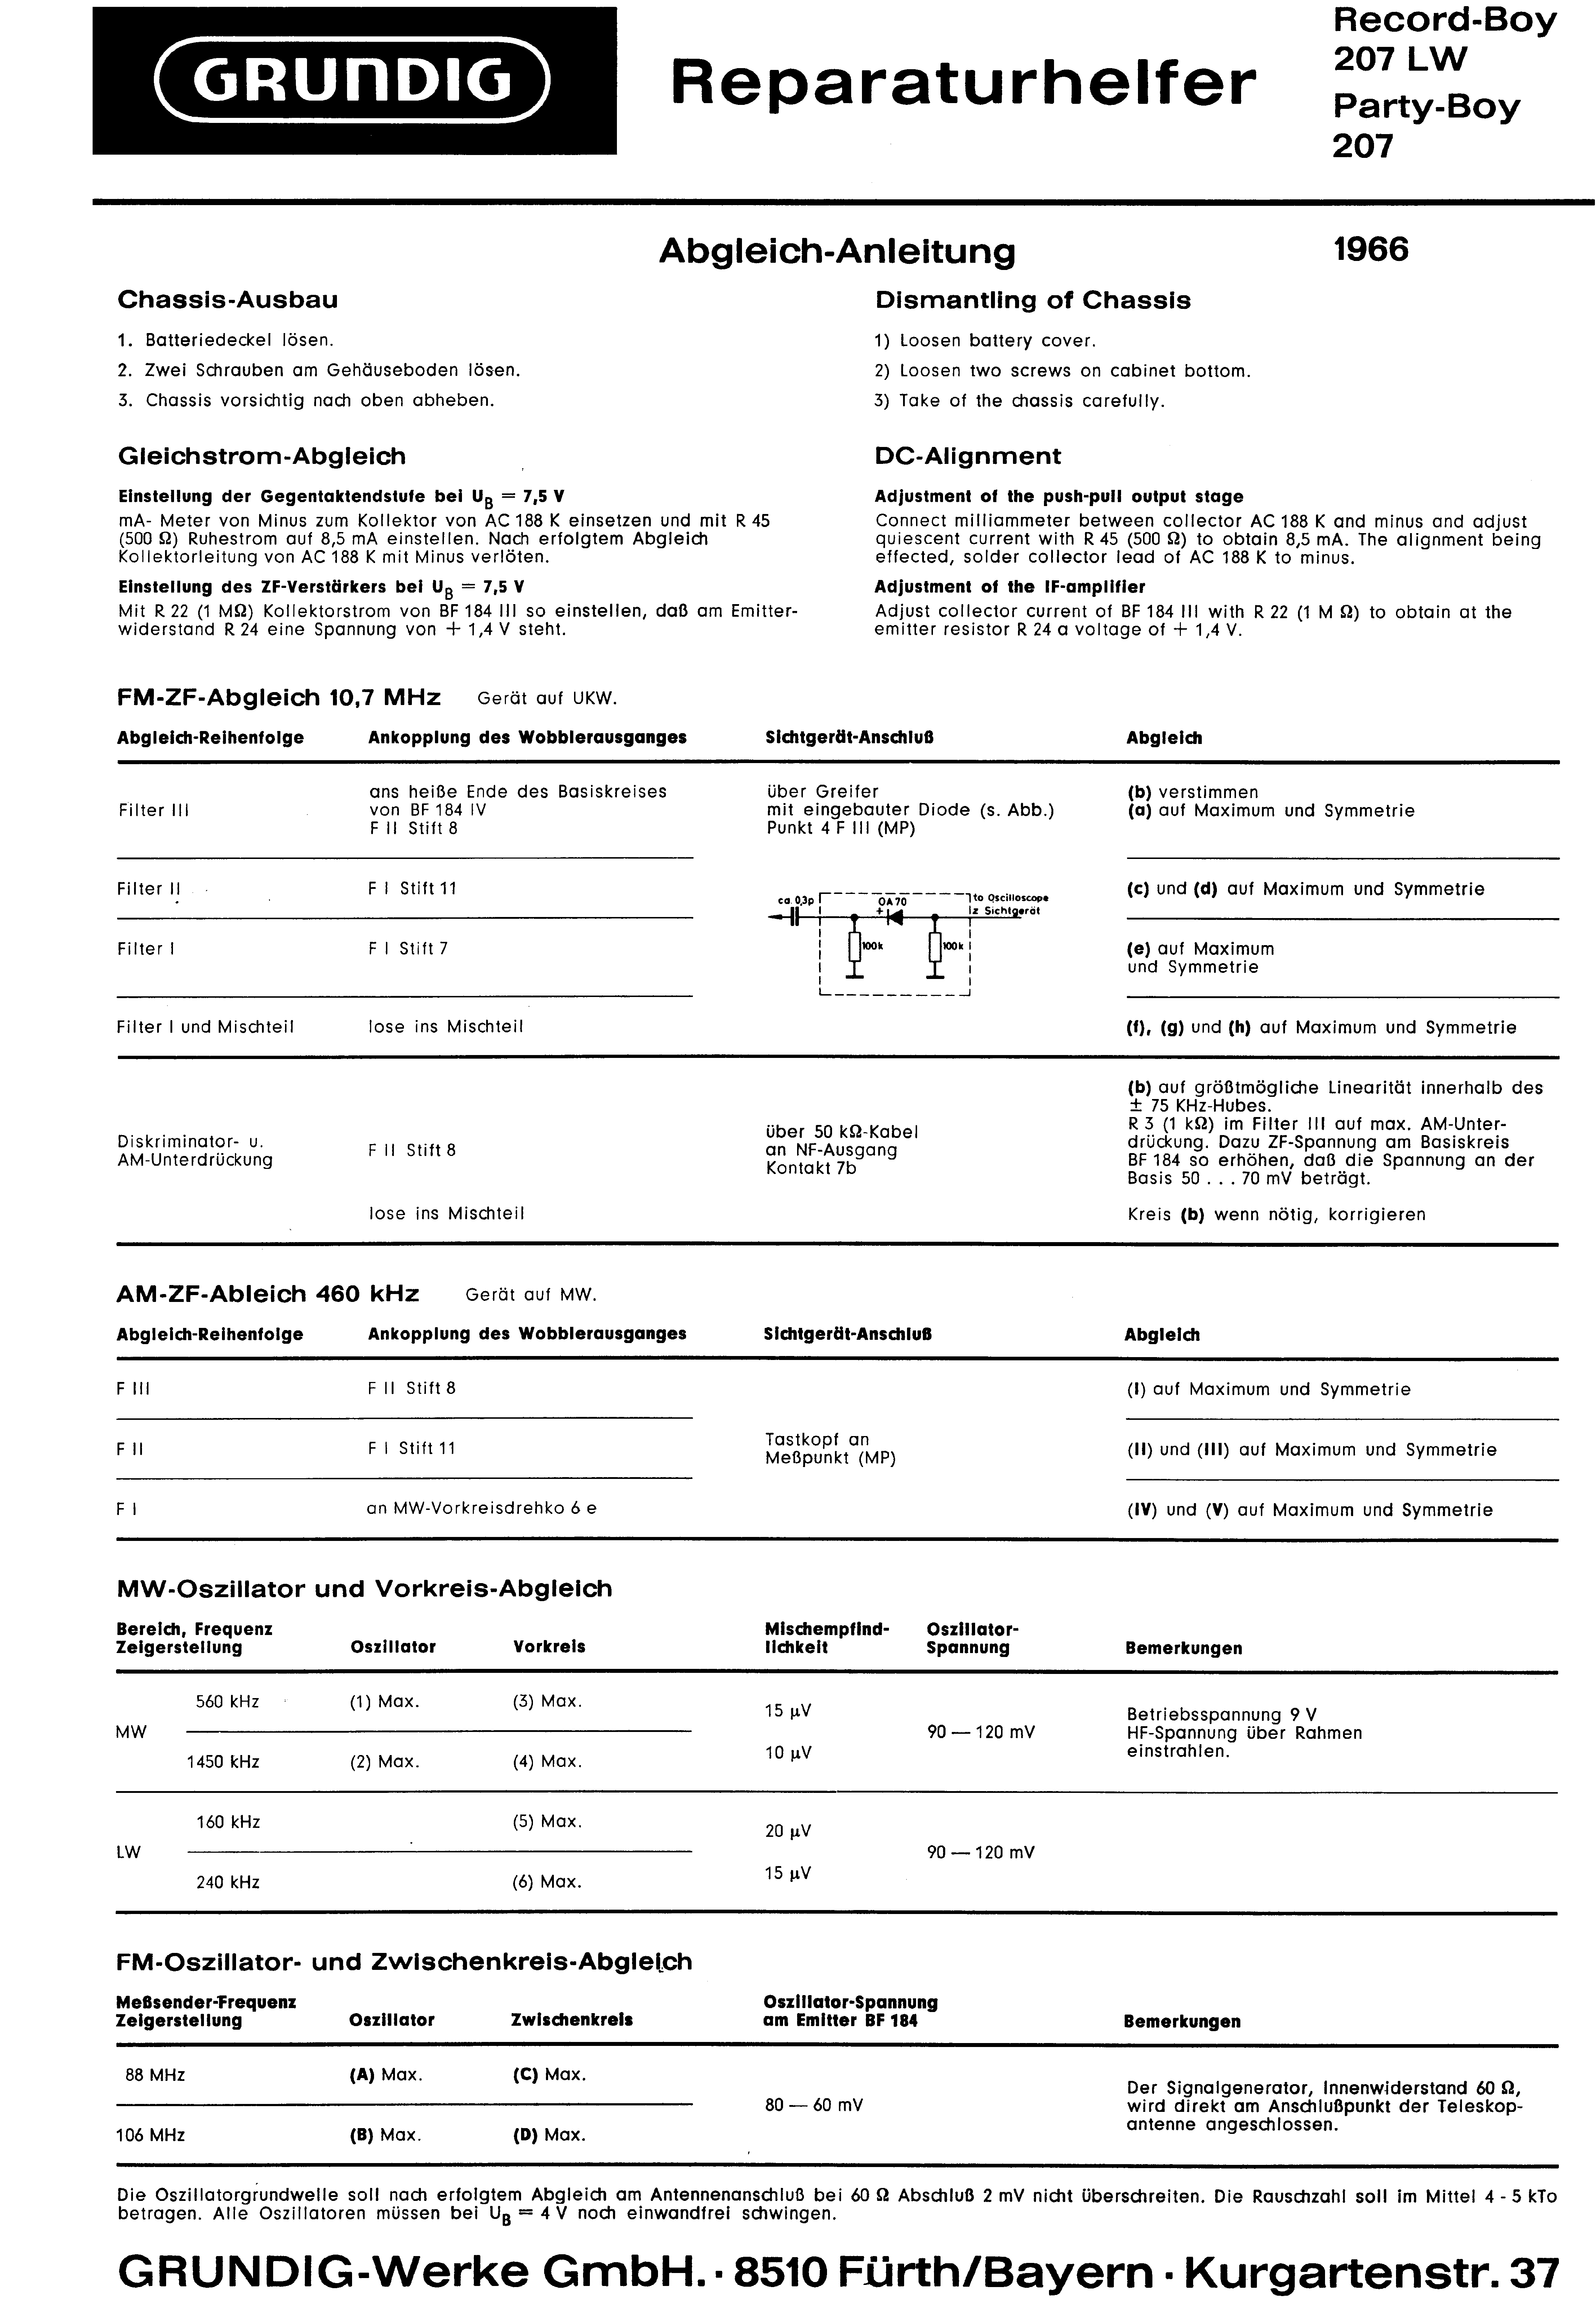 Grundig Service Manual für RT 50 Copy 